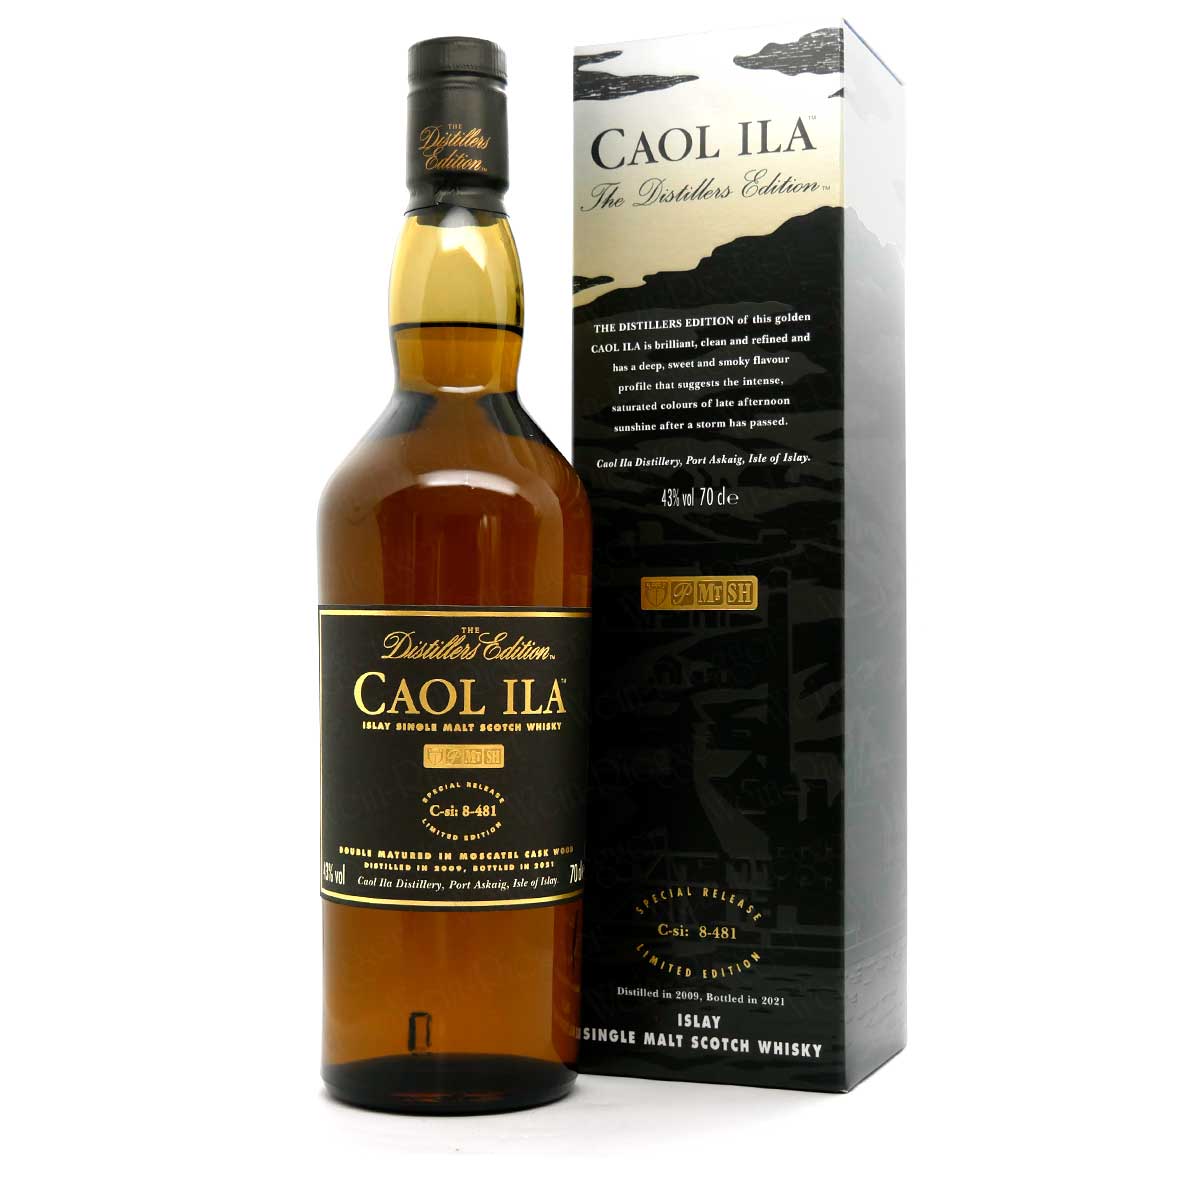 Caol Ila Distillers Edition 2009/2021 C-si 8-481